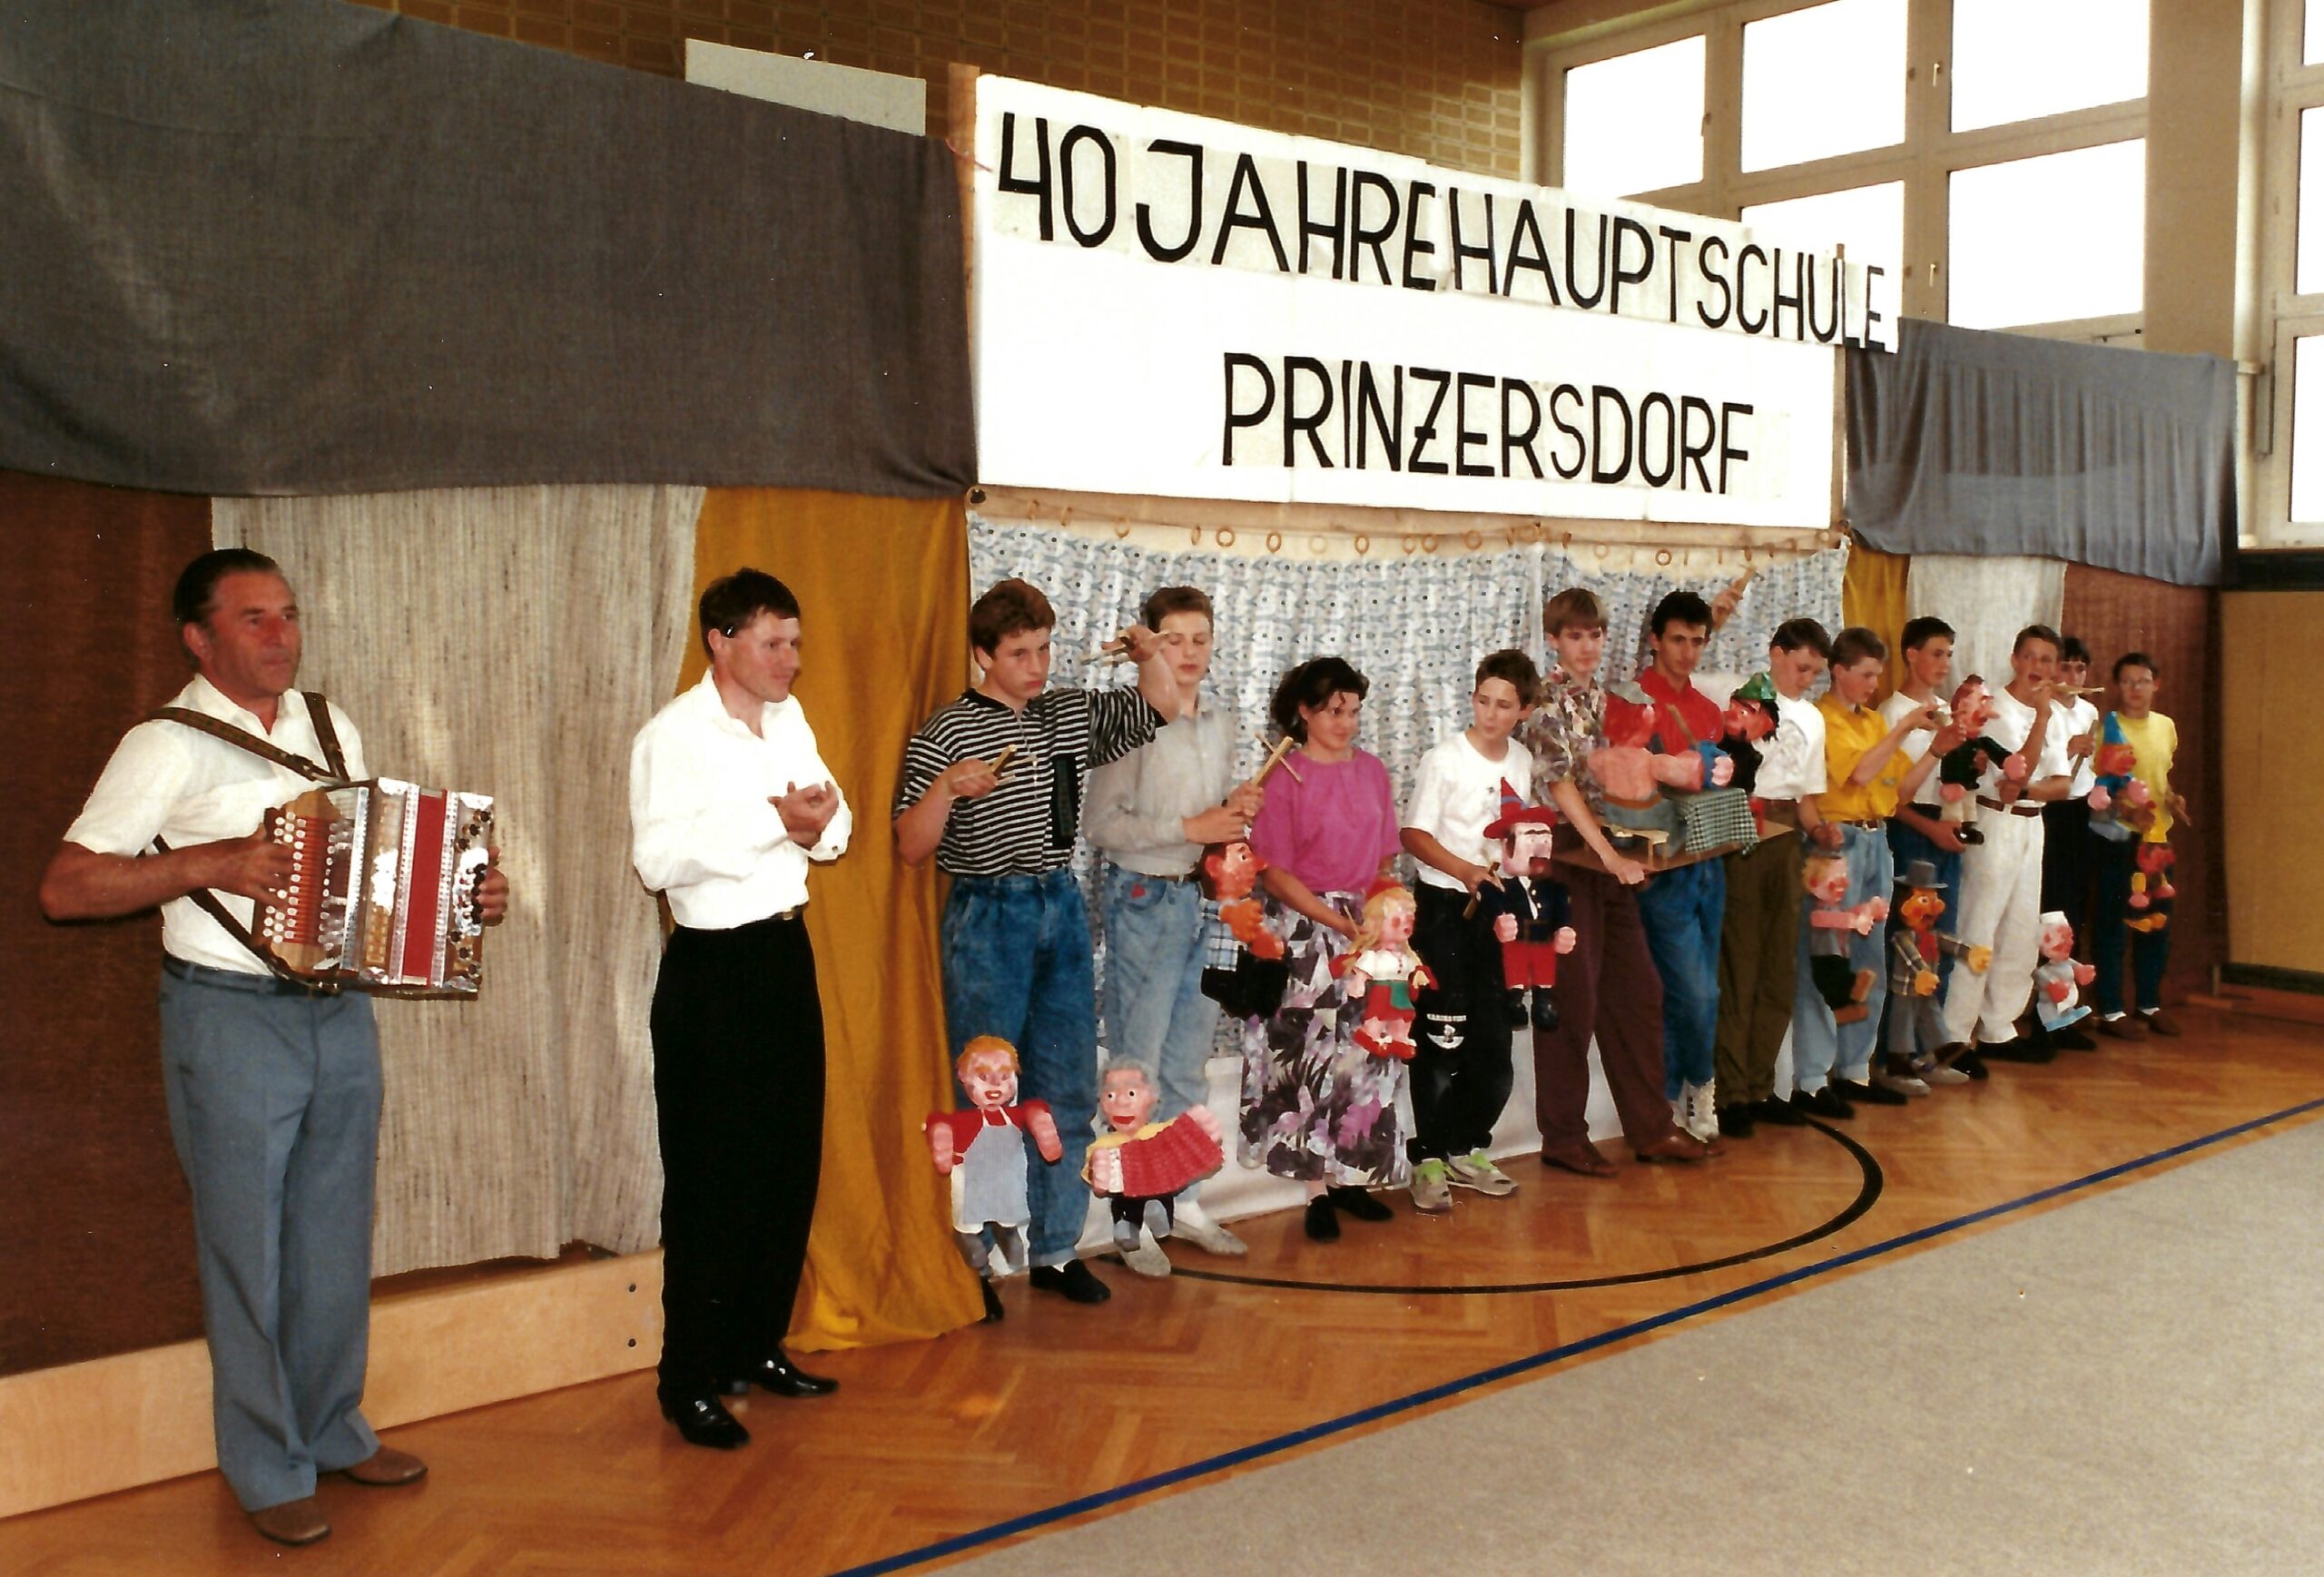 40 Jahre Hauptschule Prinzersdorf